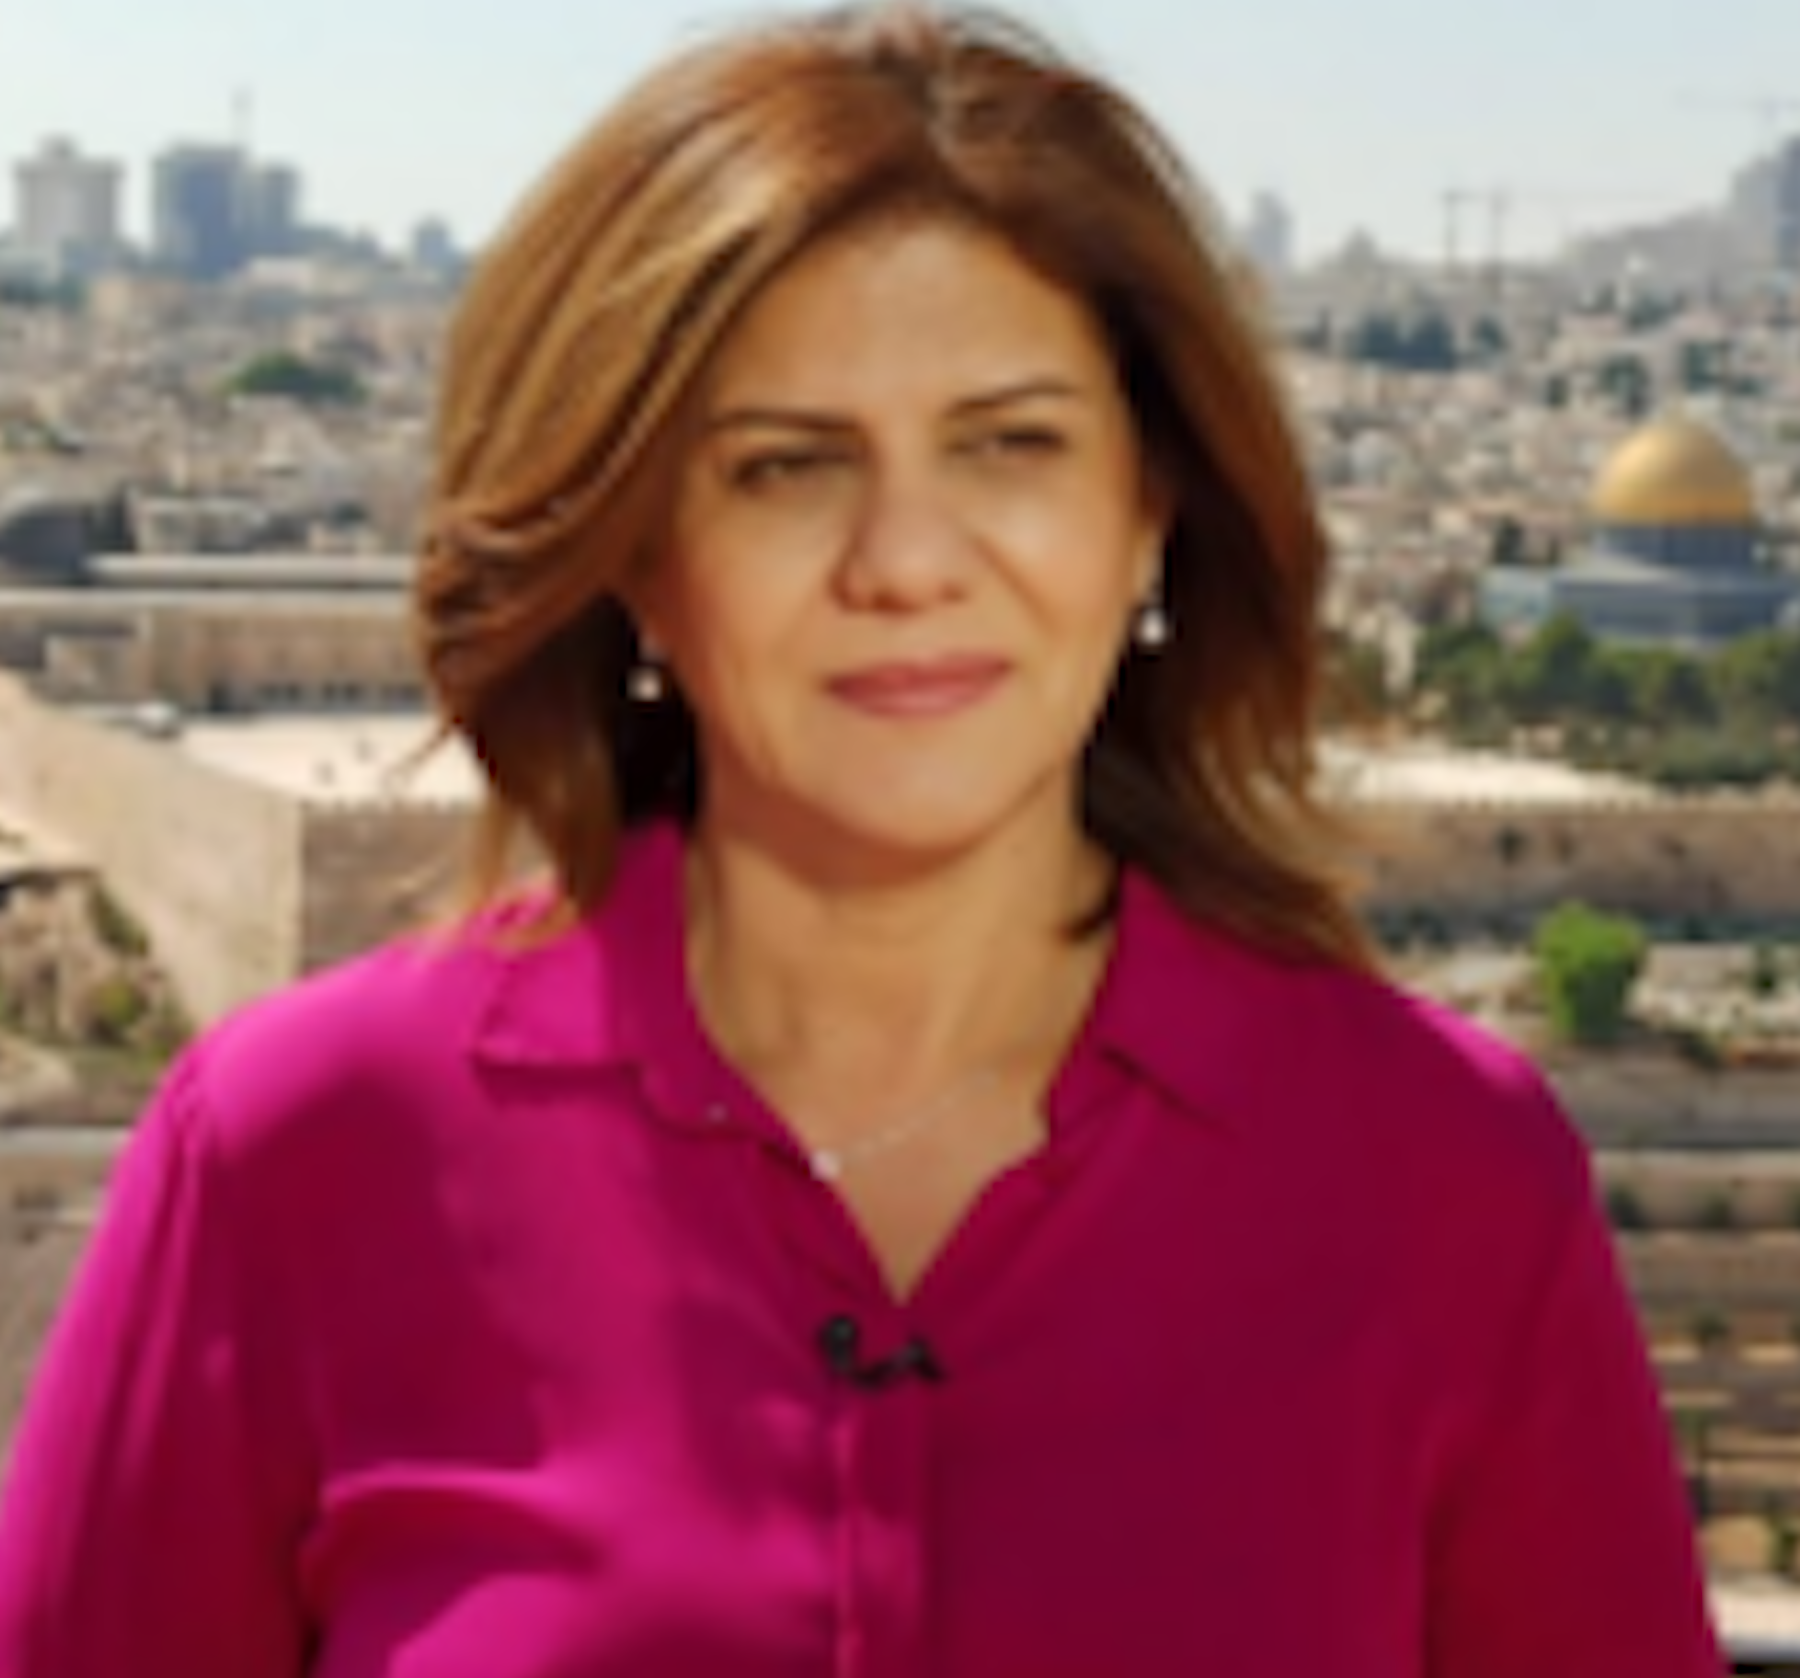 U.S. welcomes IDF’s publication of findings  on Al Jazeera reporter’s death